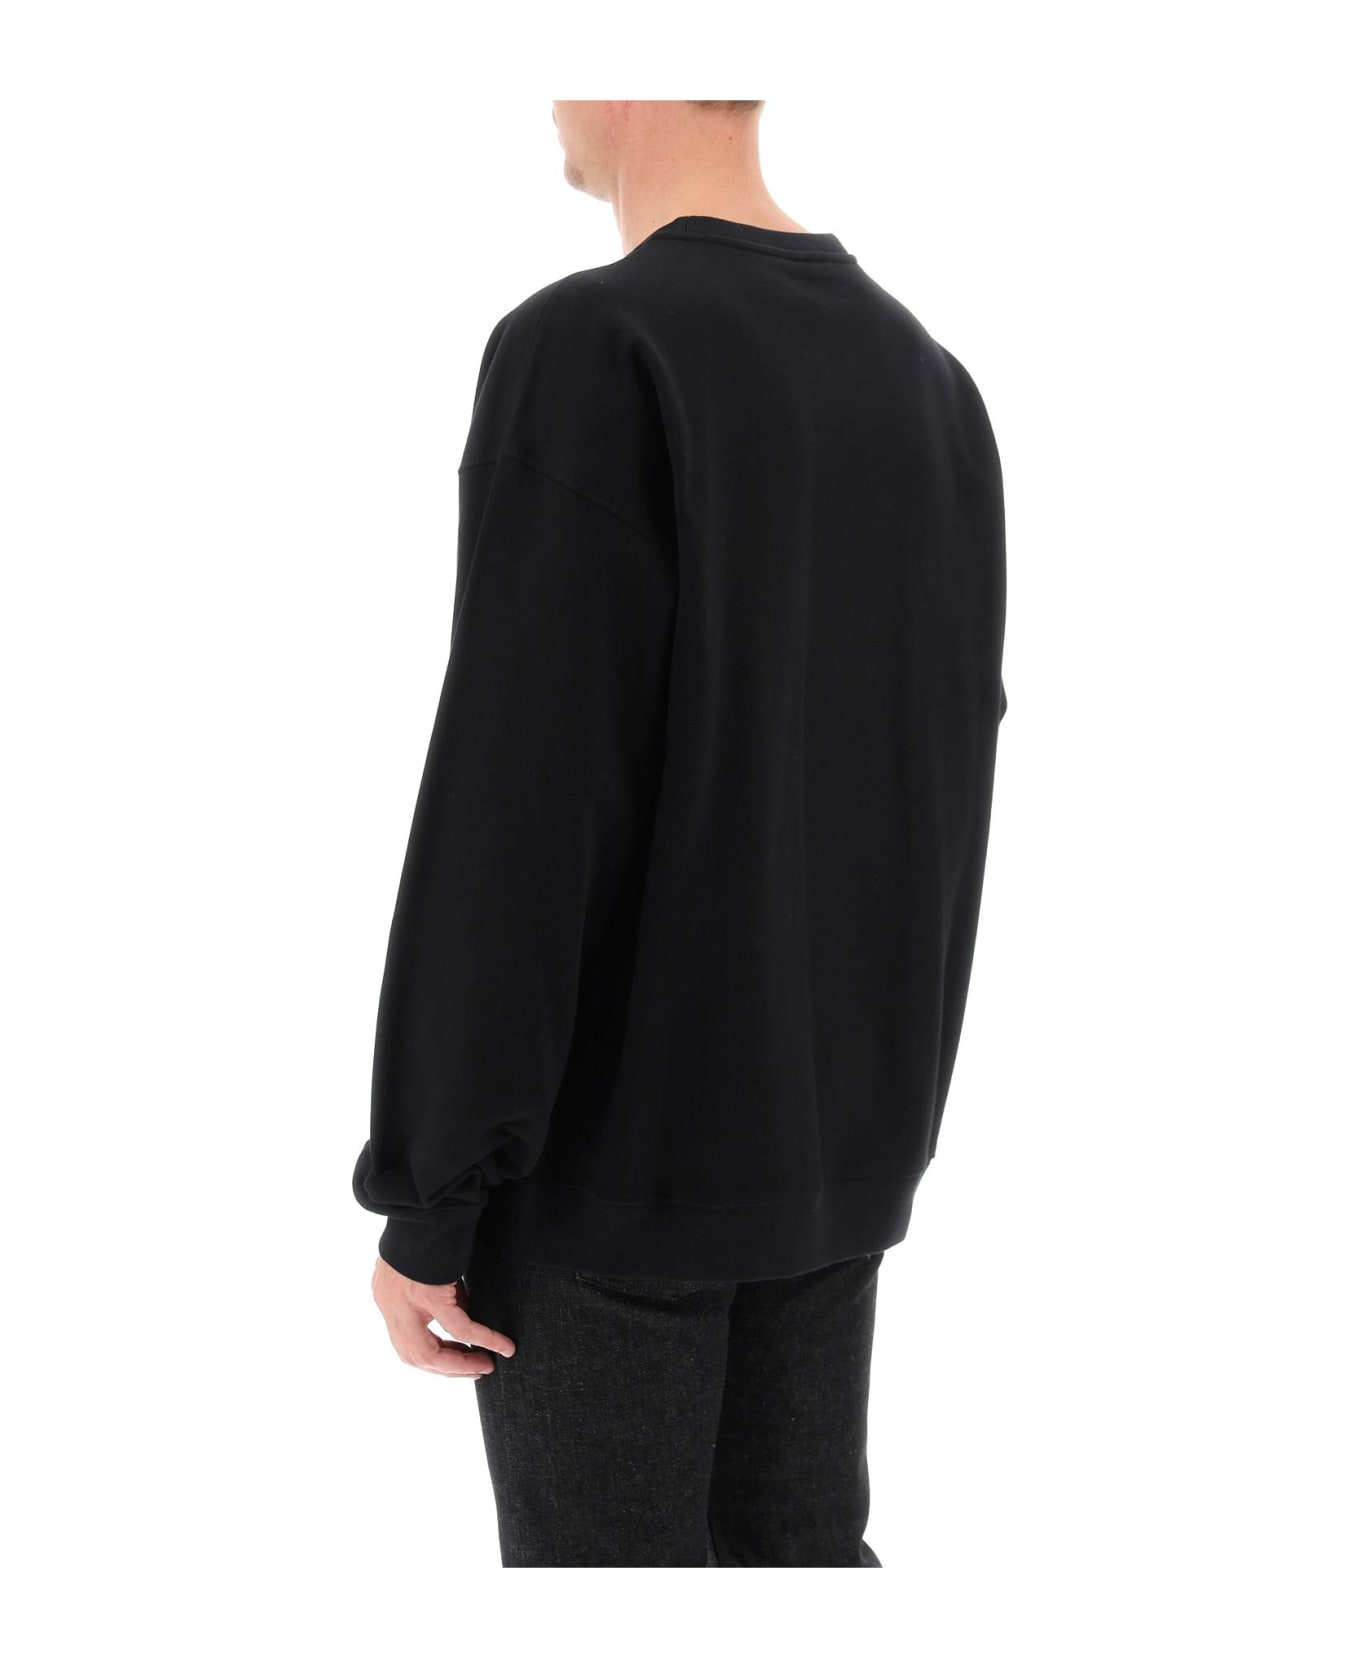 Versace Medusa Flame Sweatshirt - BLACK (Black)